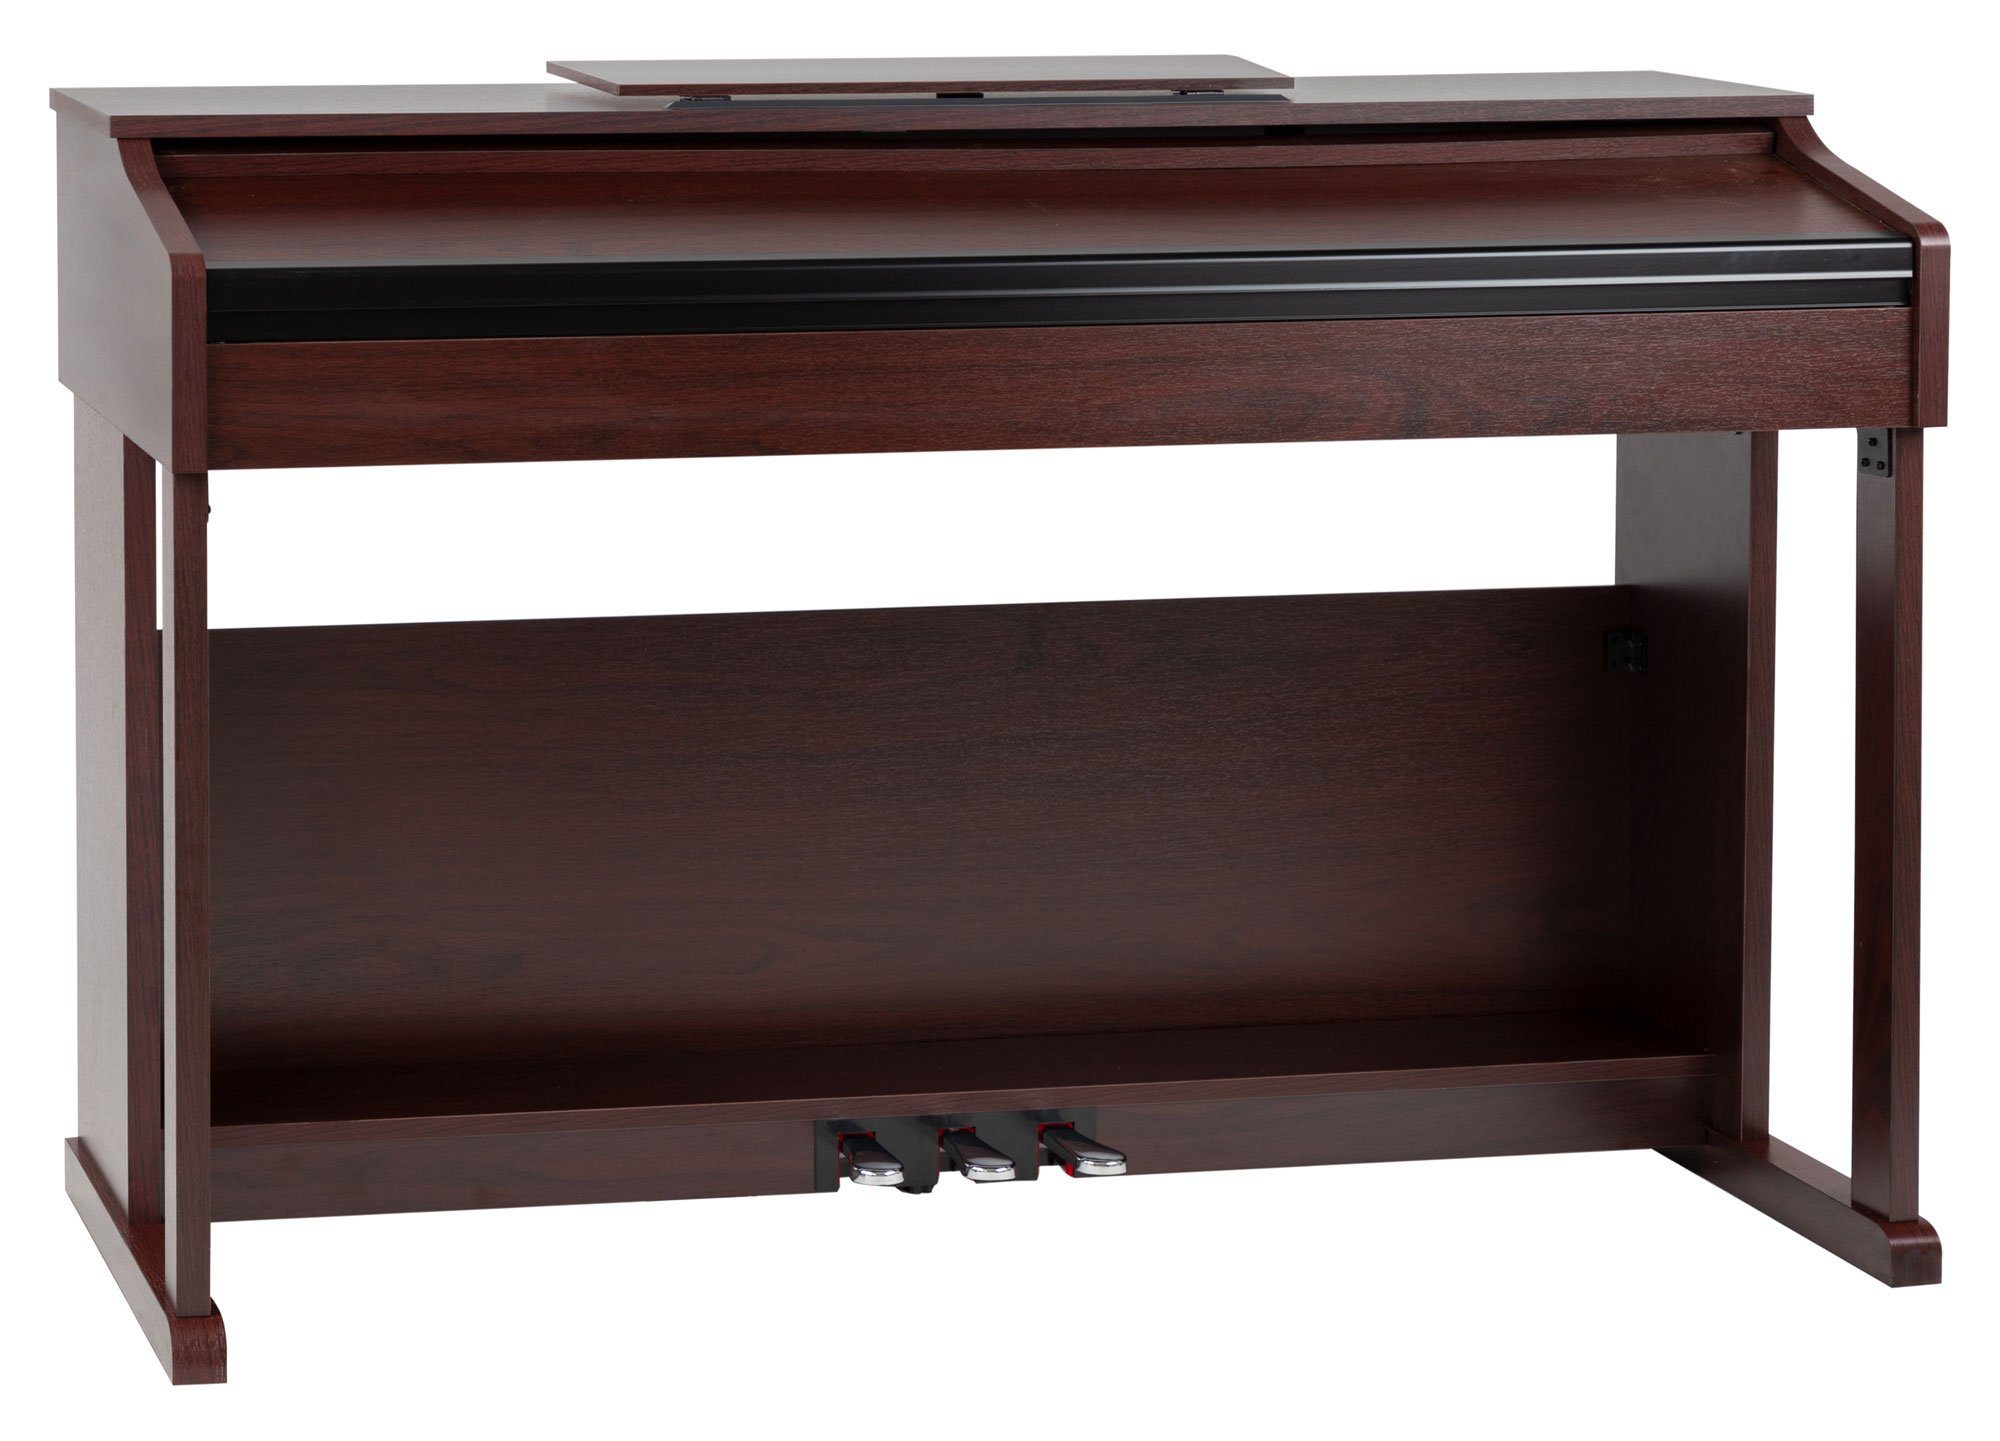 FunKey E-Piano DP-2688A Digitalpiano Set Economy-Keyboardbank), Lernfunktion, inkl. 88 (Spar-Set, anschlagsdynamische - Tasten, & Record- Playback-Funktion